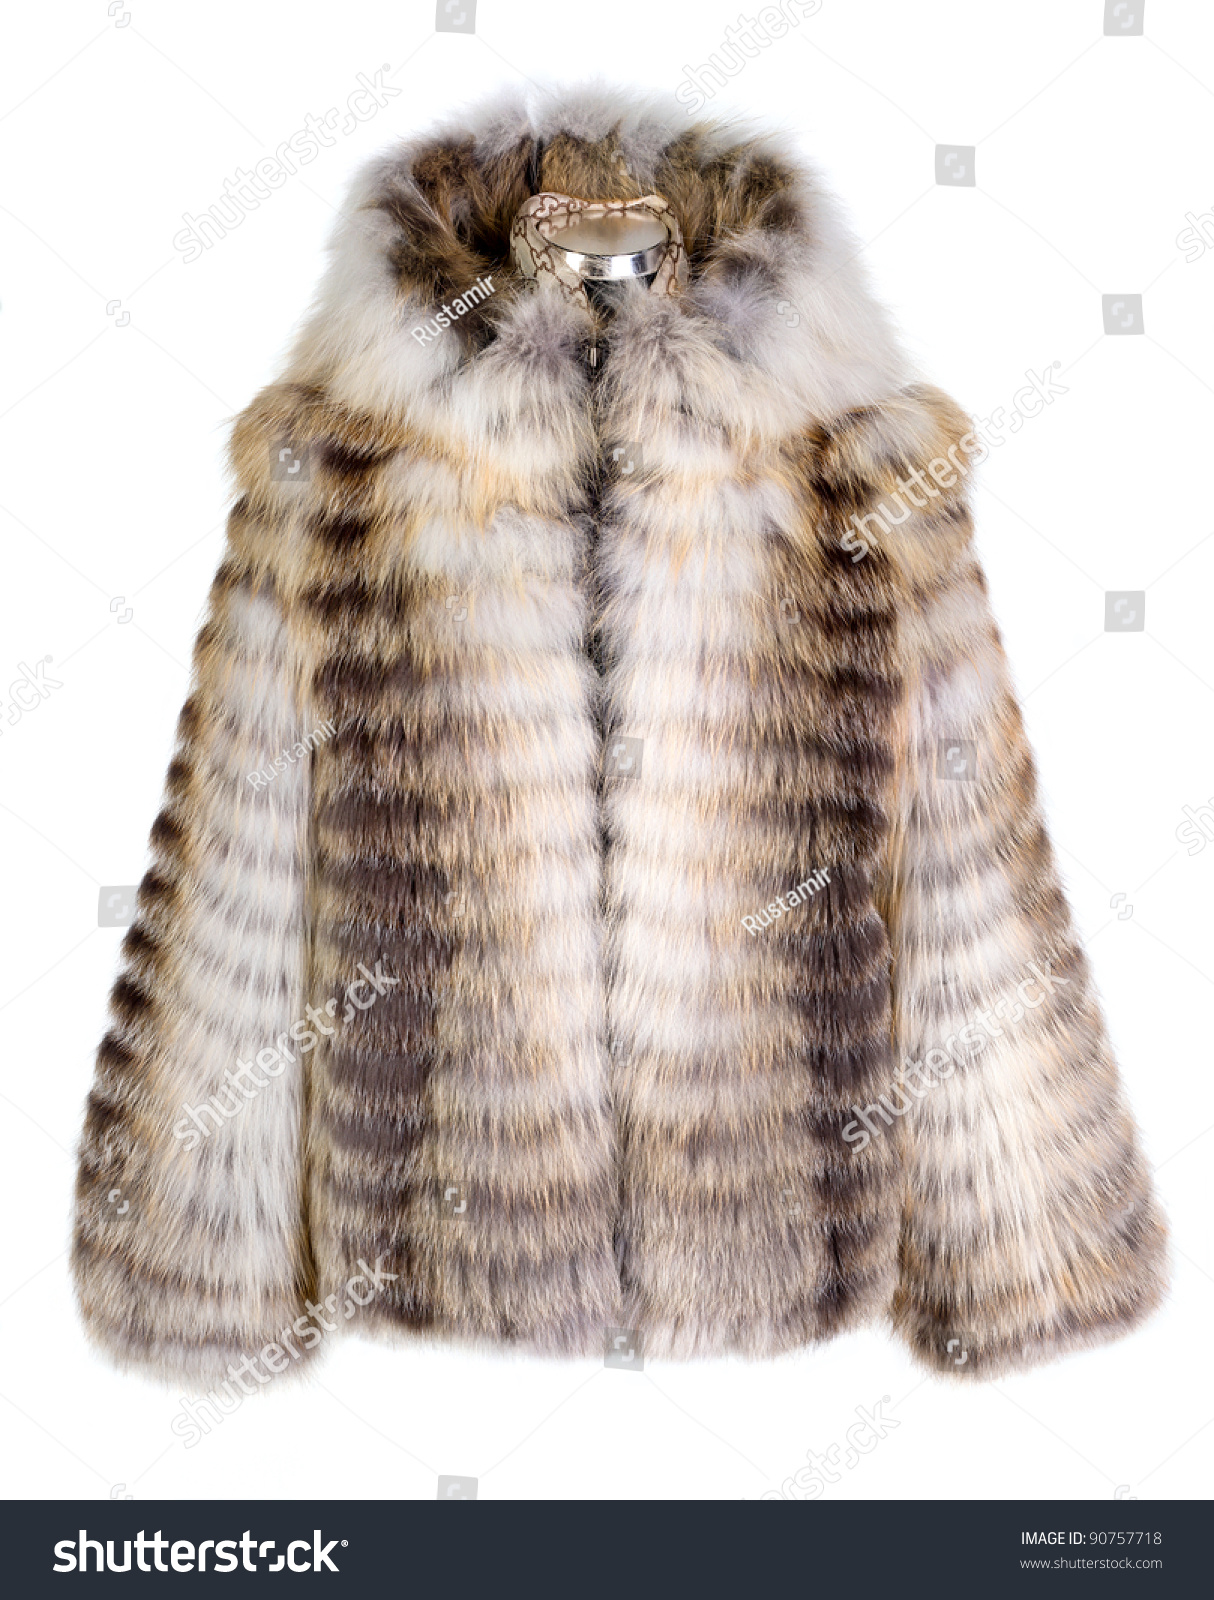 Real Fur Coat Isolated On White Background Stock Photo 90757718 ...